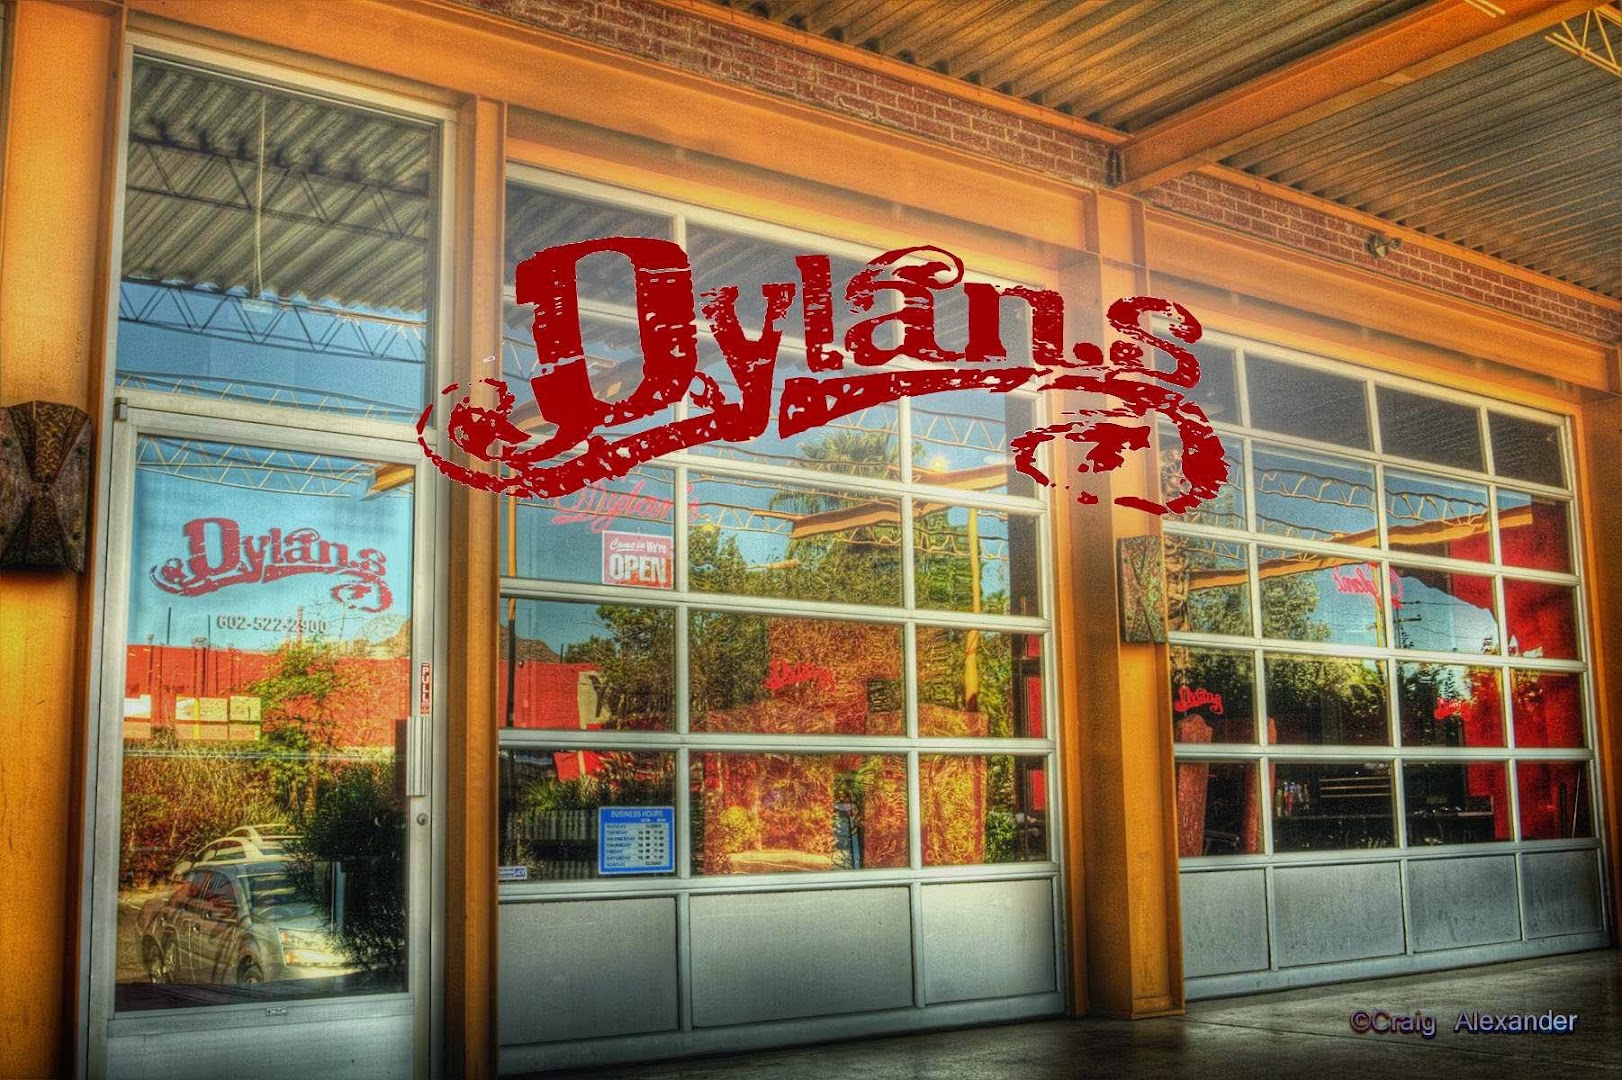 Dylan's Salon